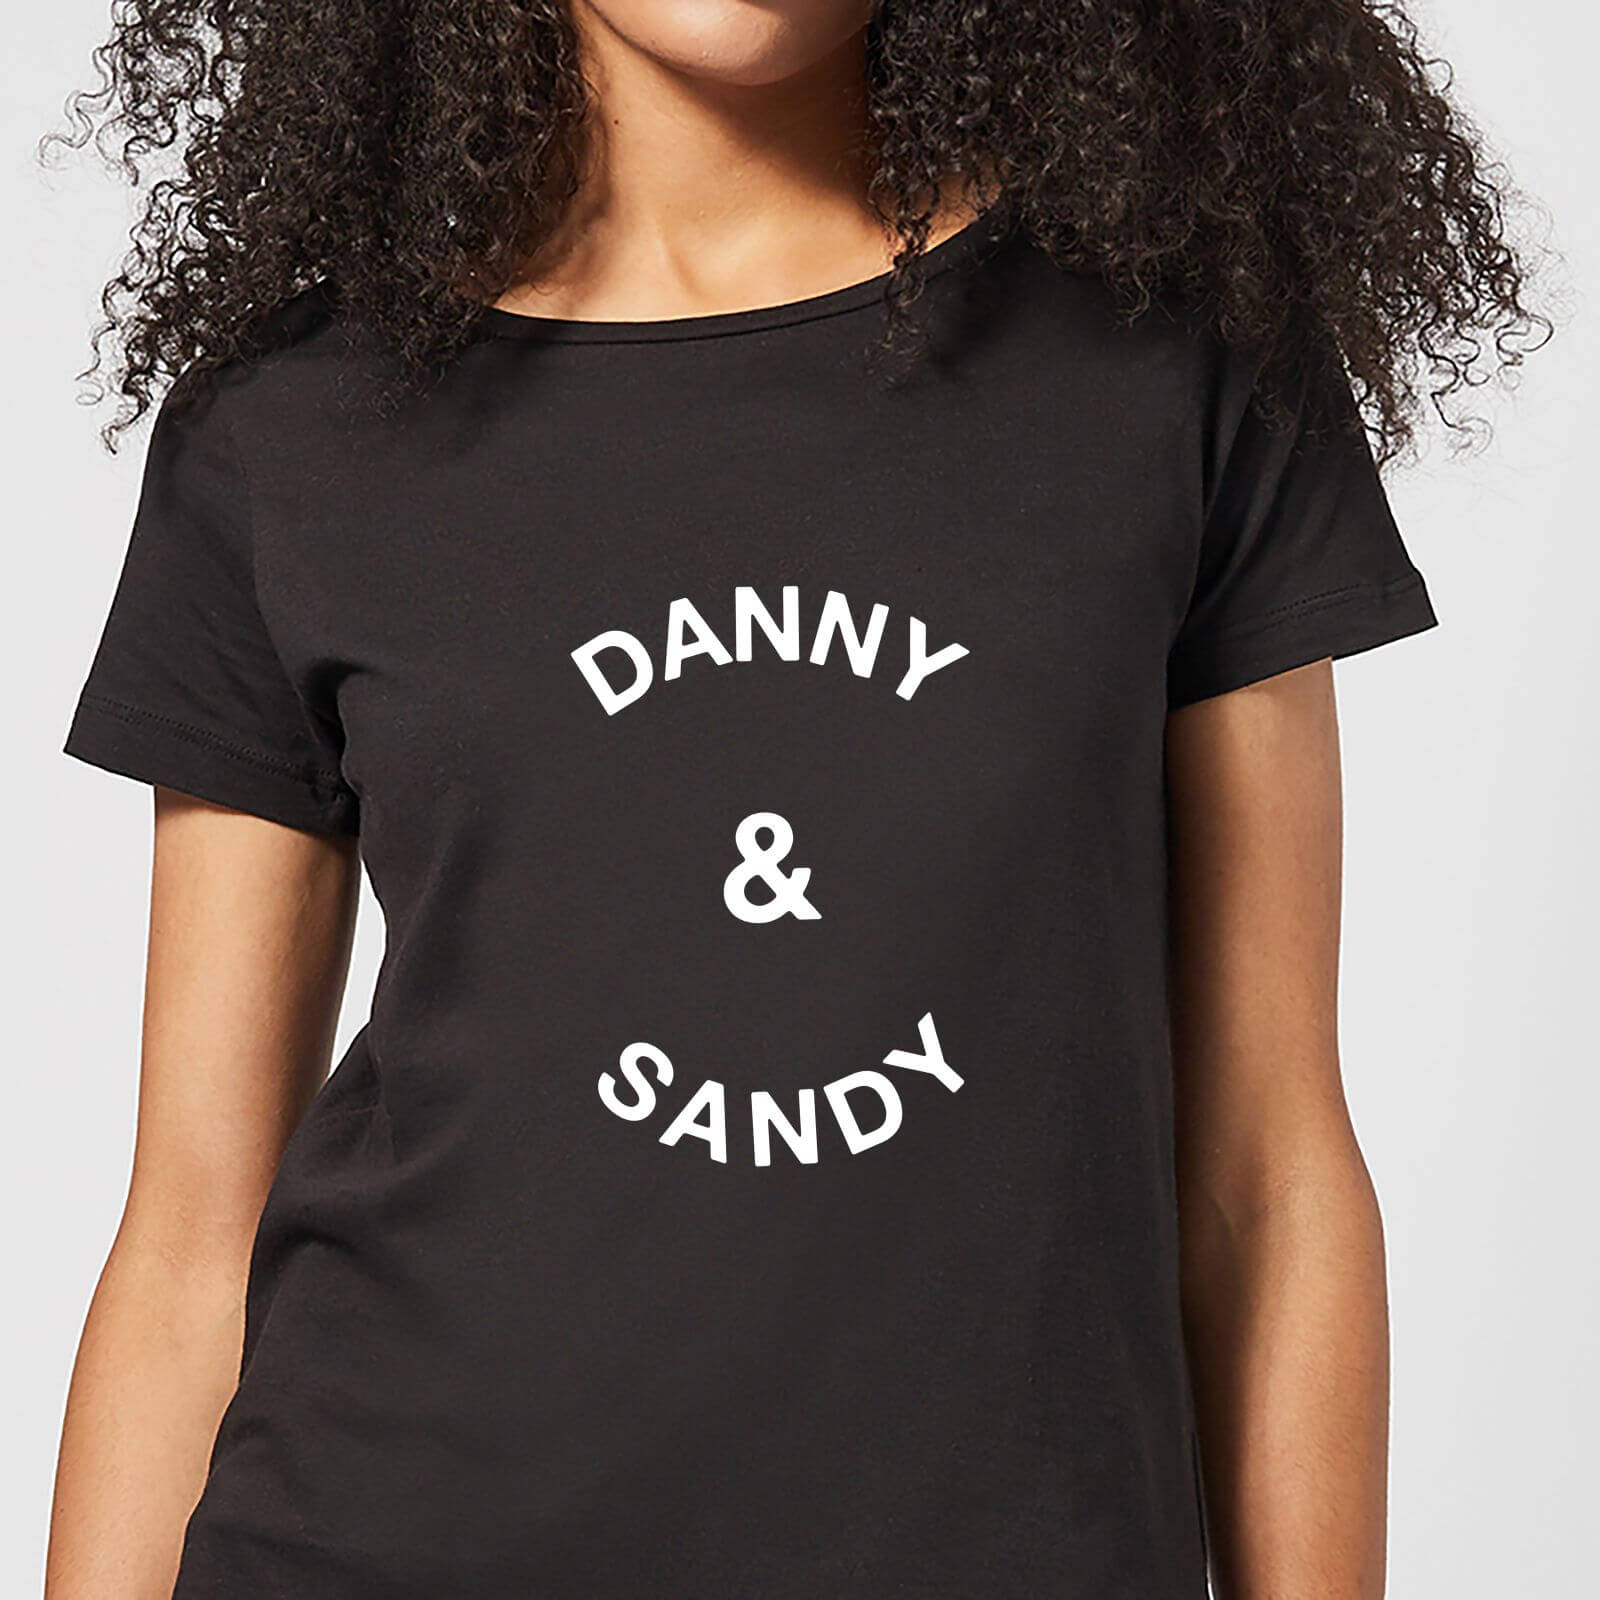 Danny & Sandy Women's T-Shirt - Black - S - Black